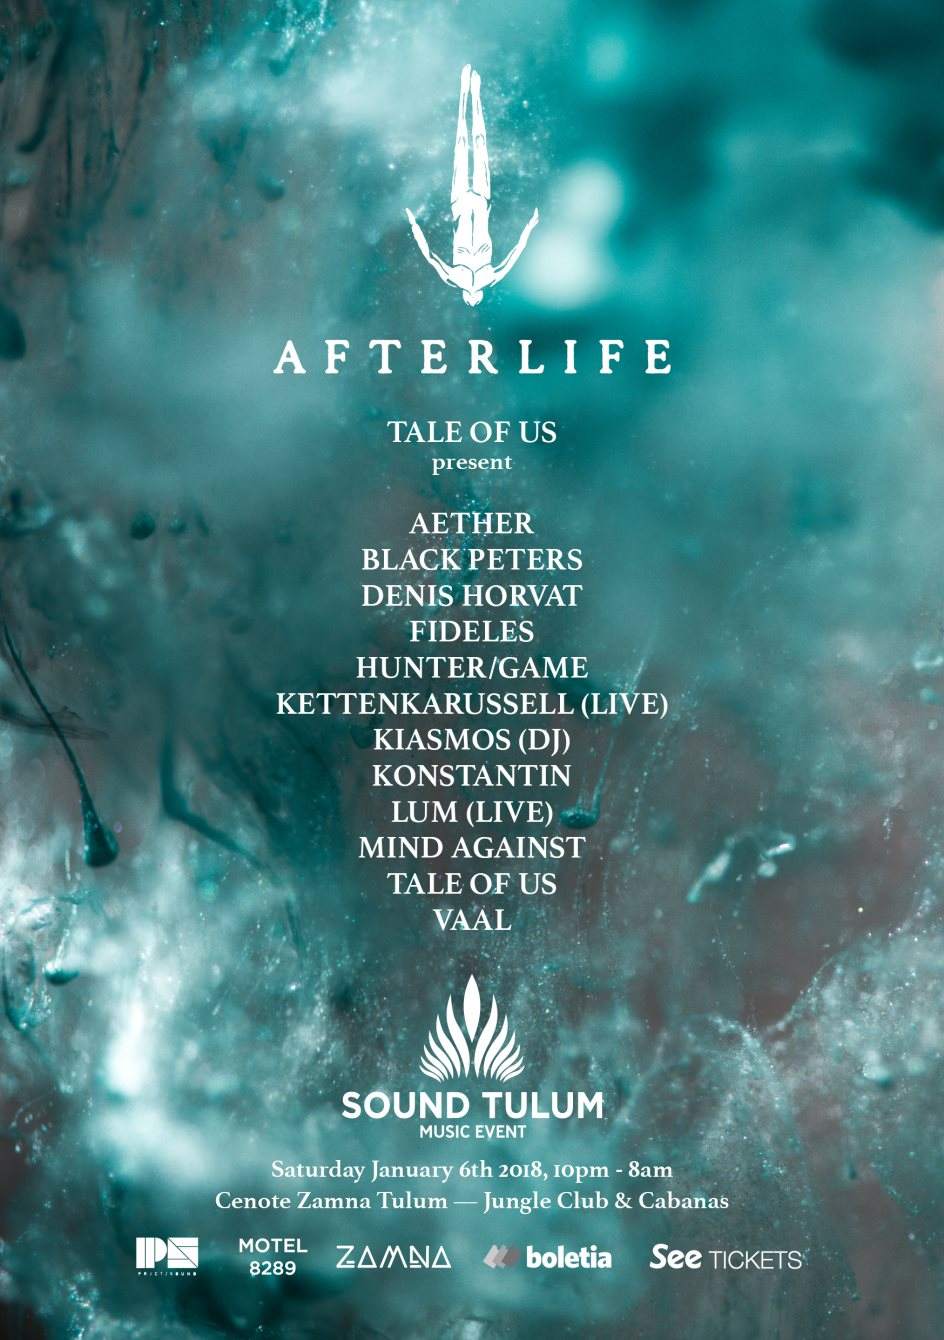 Afterlife desvela su line-up completo para Sound Tulum - WikiEDM